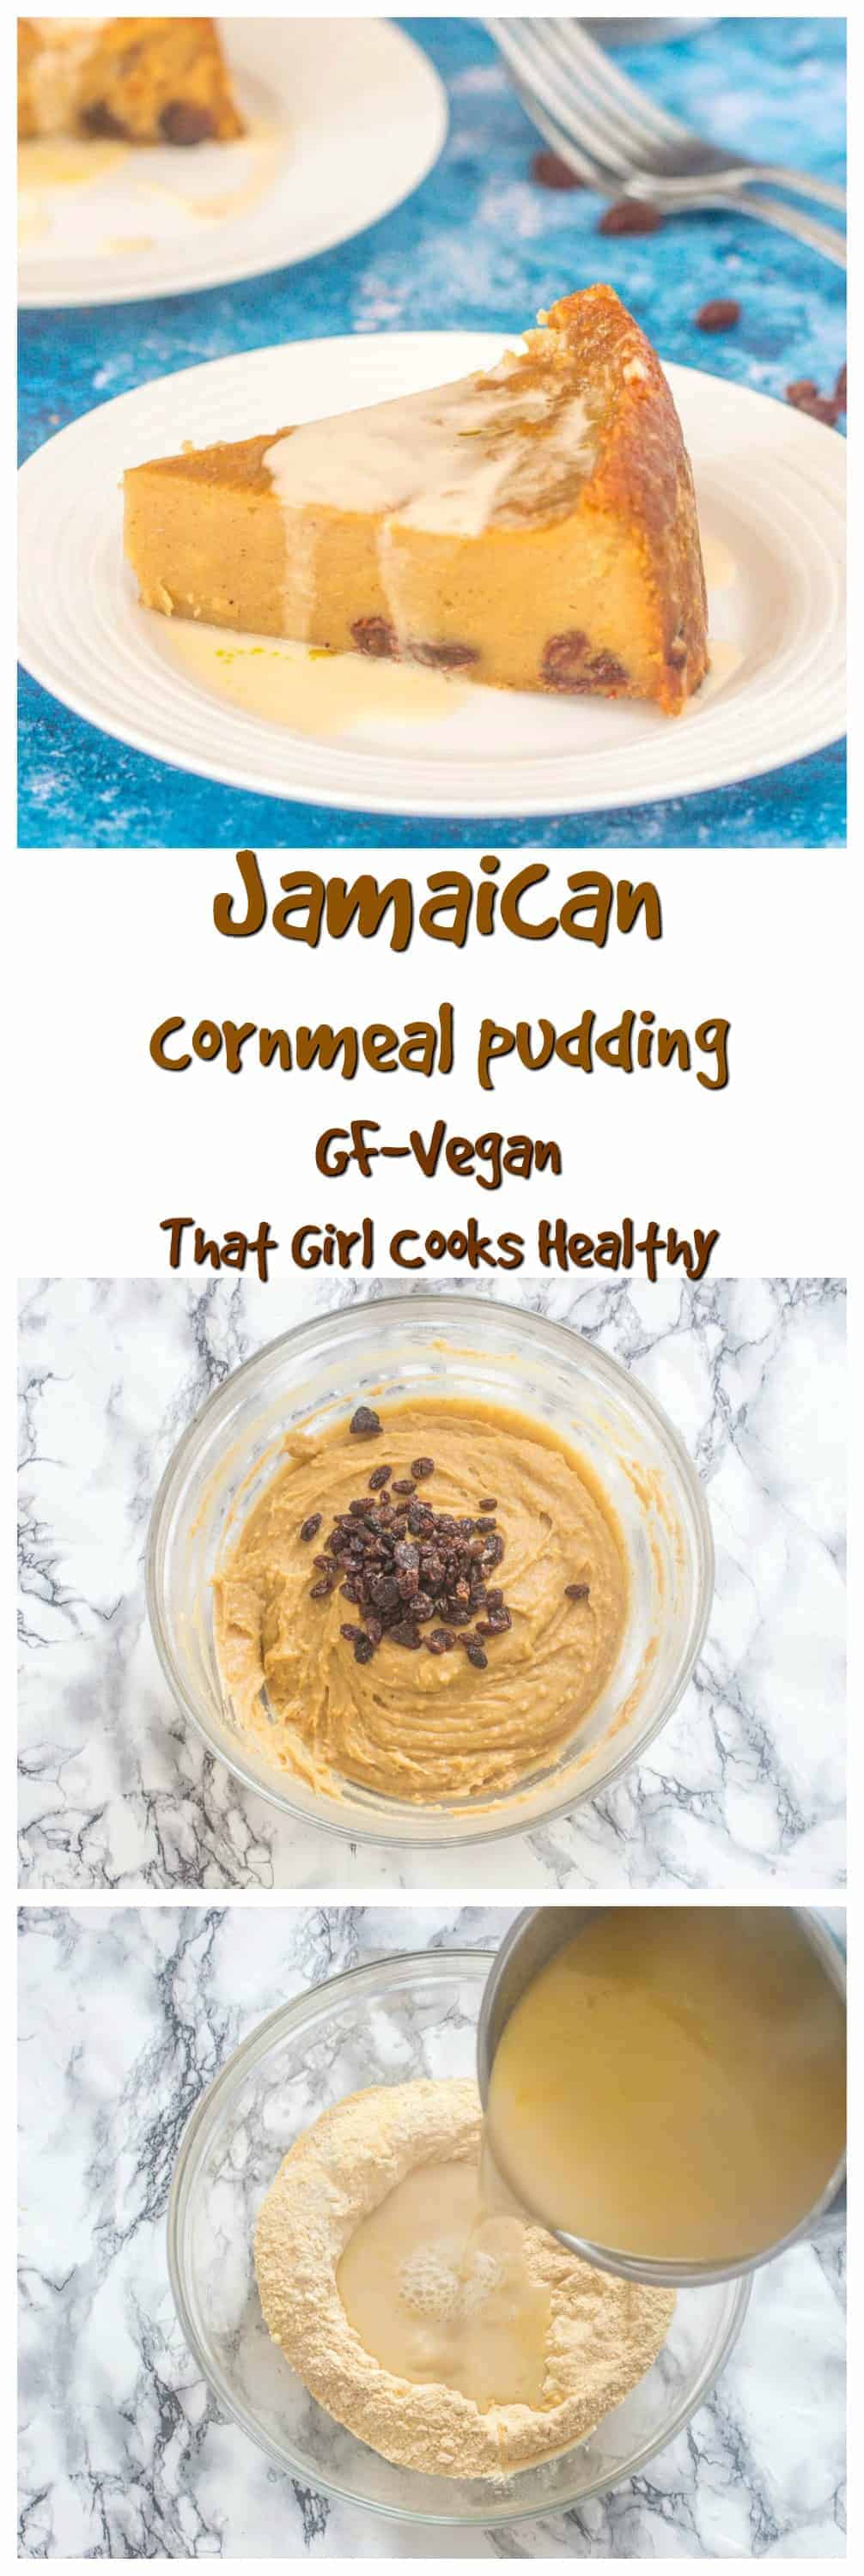 Jamaican cornmeal pudding - delicious, sweet, dense gluten free and vegan